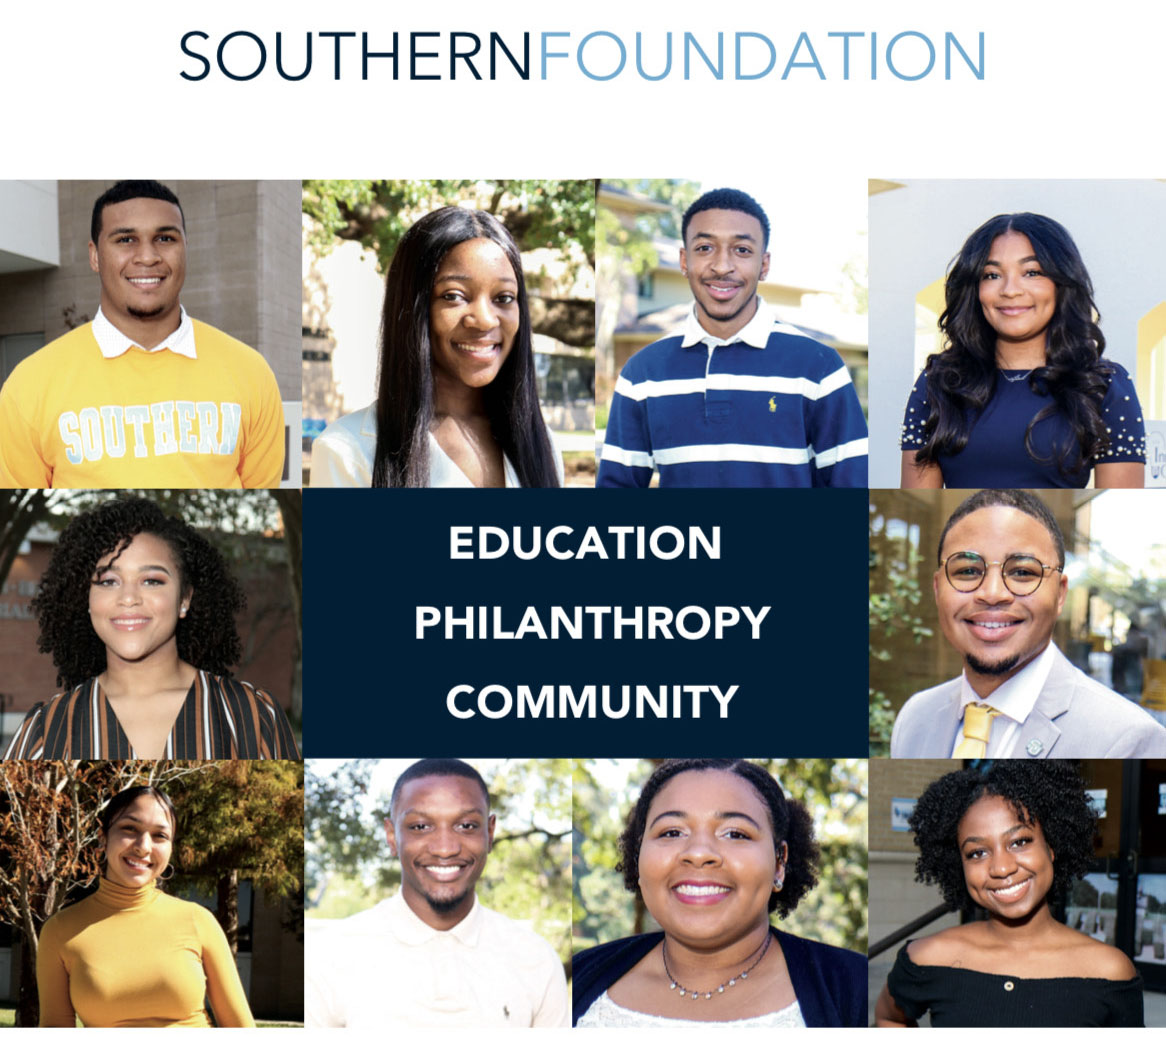 Education Philanthropy Community Flyer